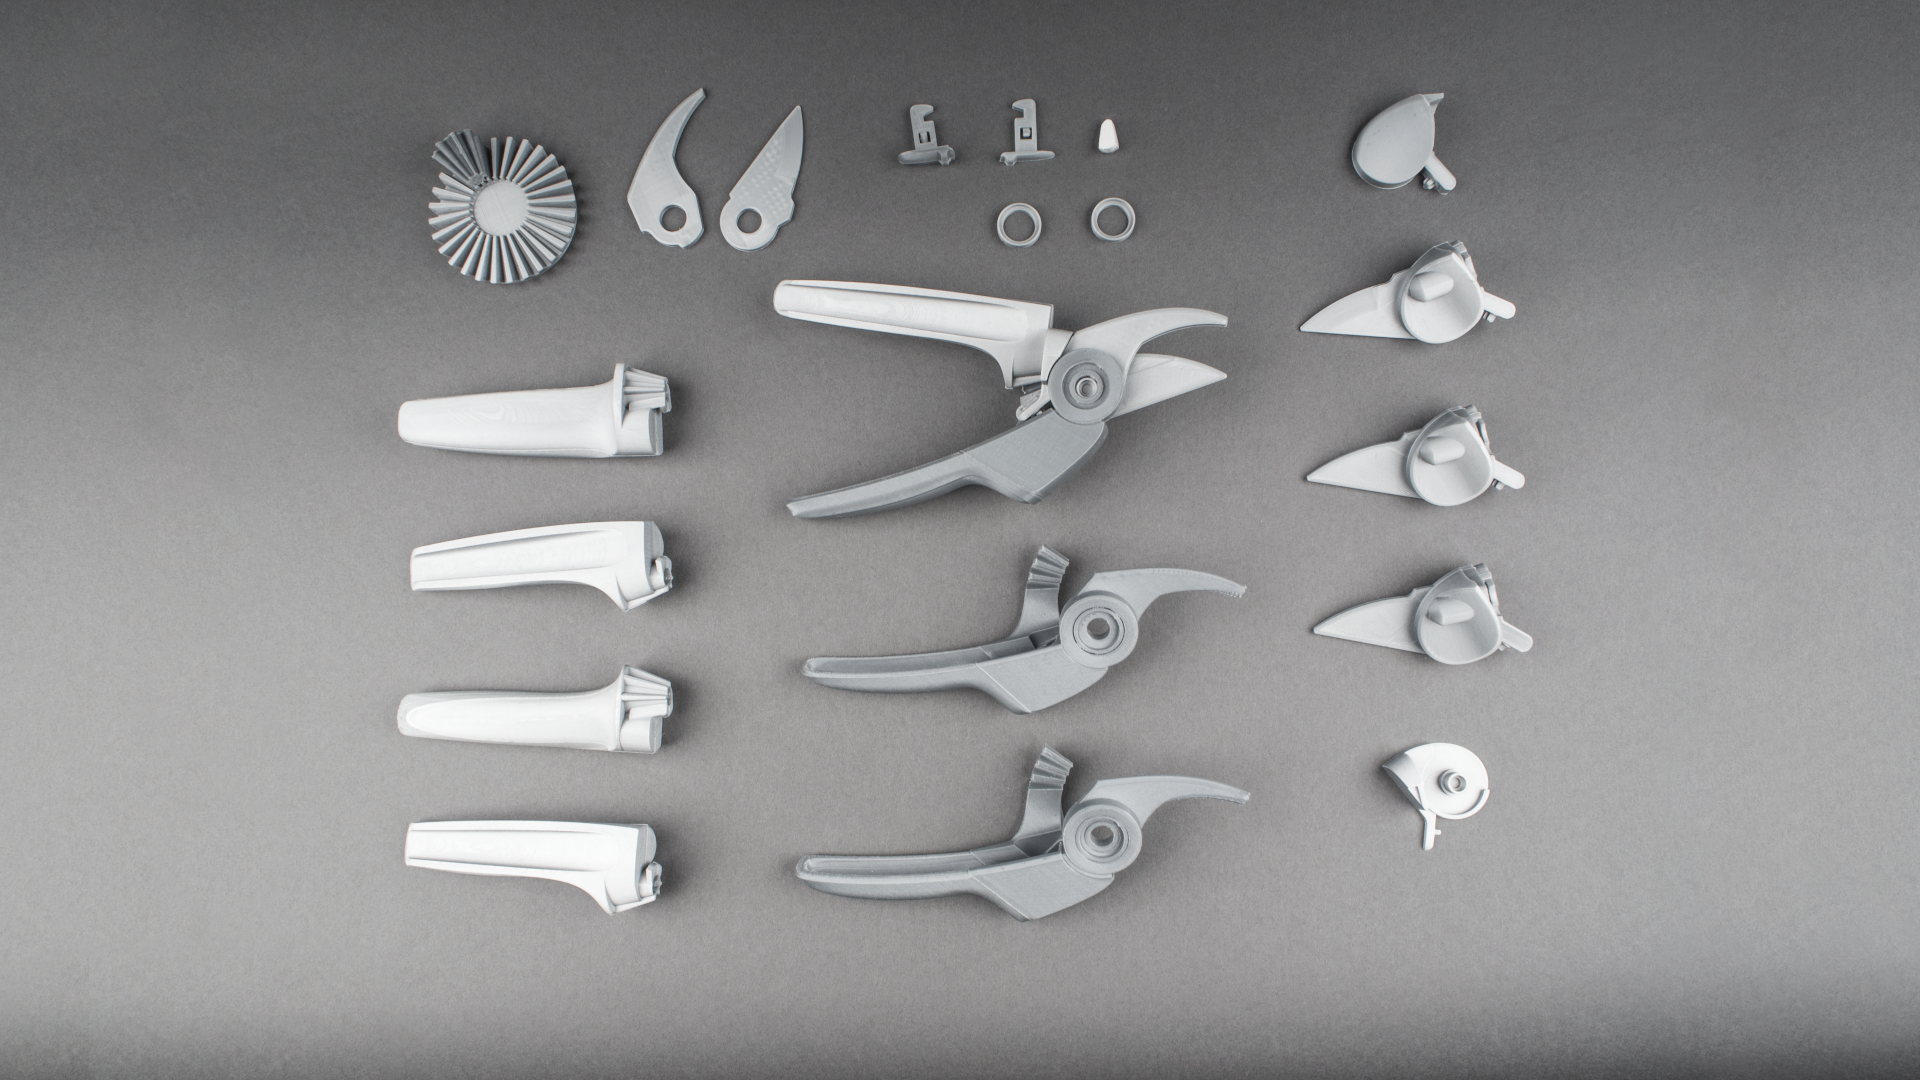 3D printed prototypes of redesigned pruner